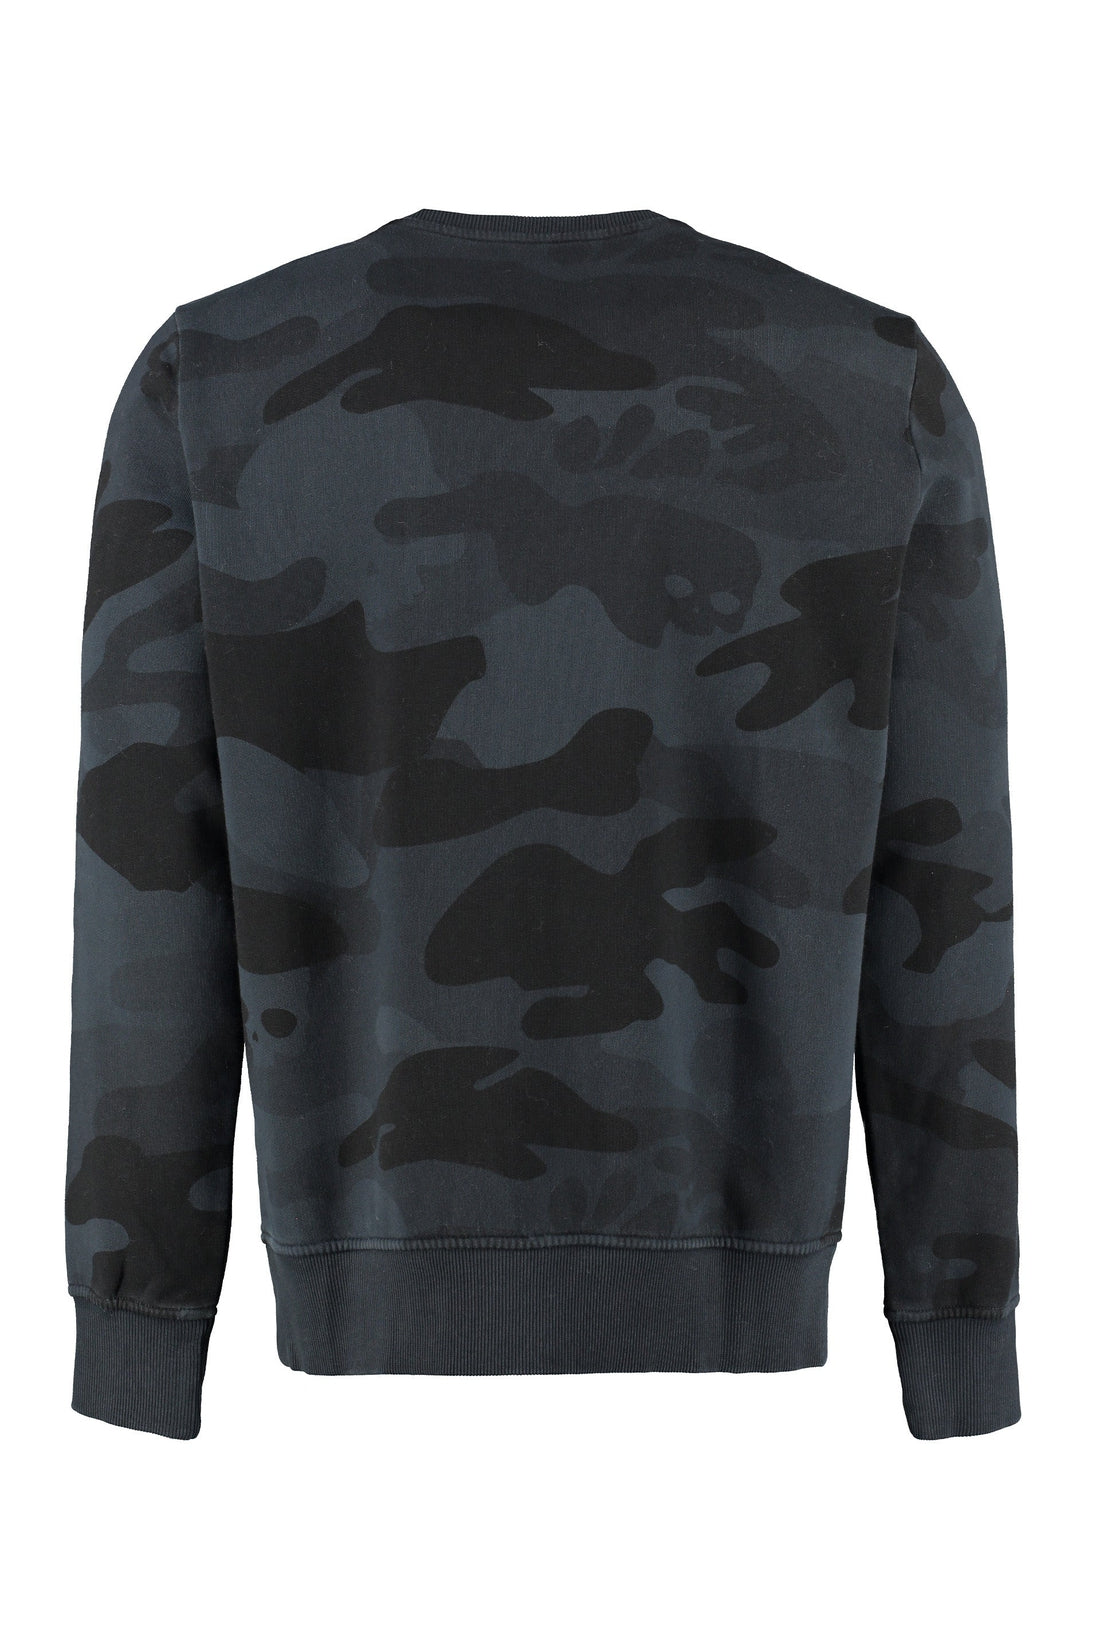 HYDROGEN-OUTLET-SALE-Cotton crew-neck sweatshirt-ARCHIVIST